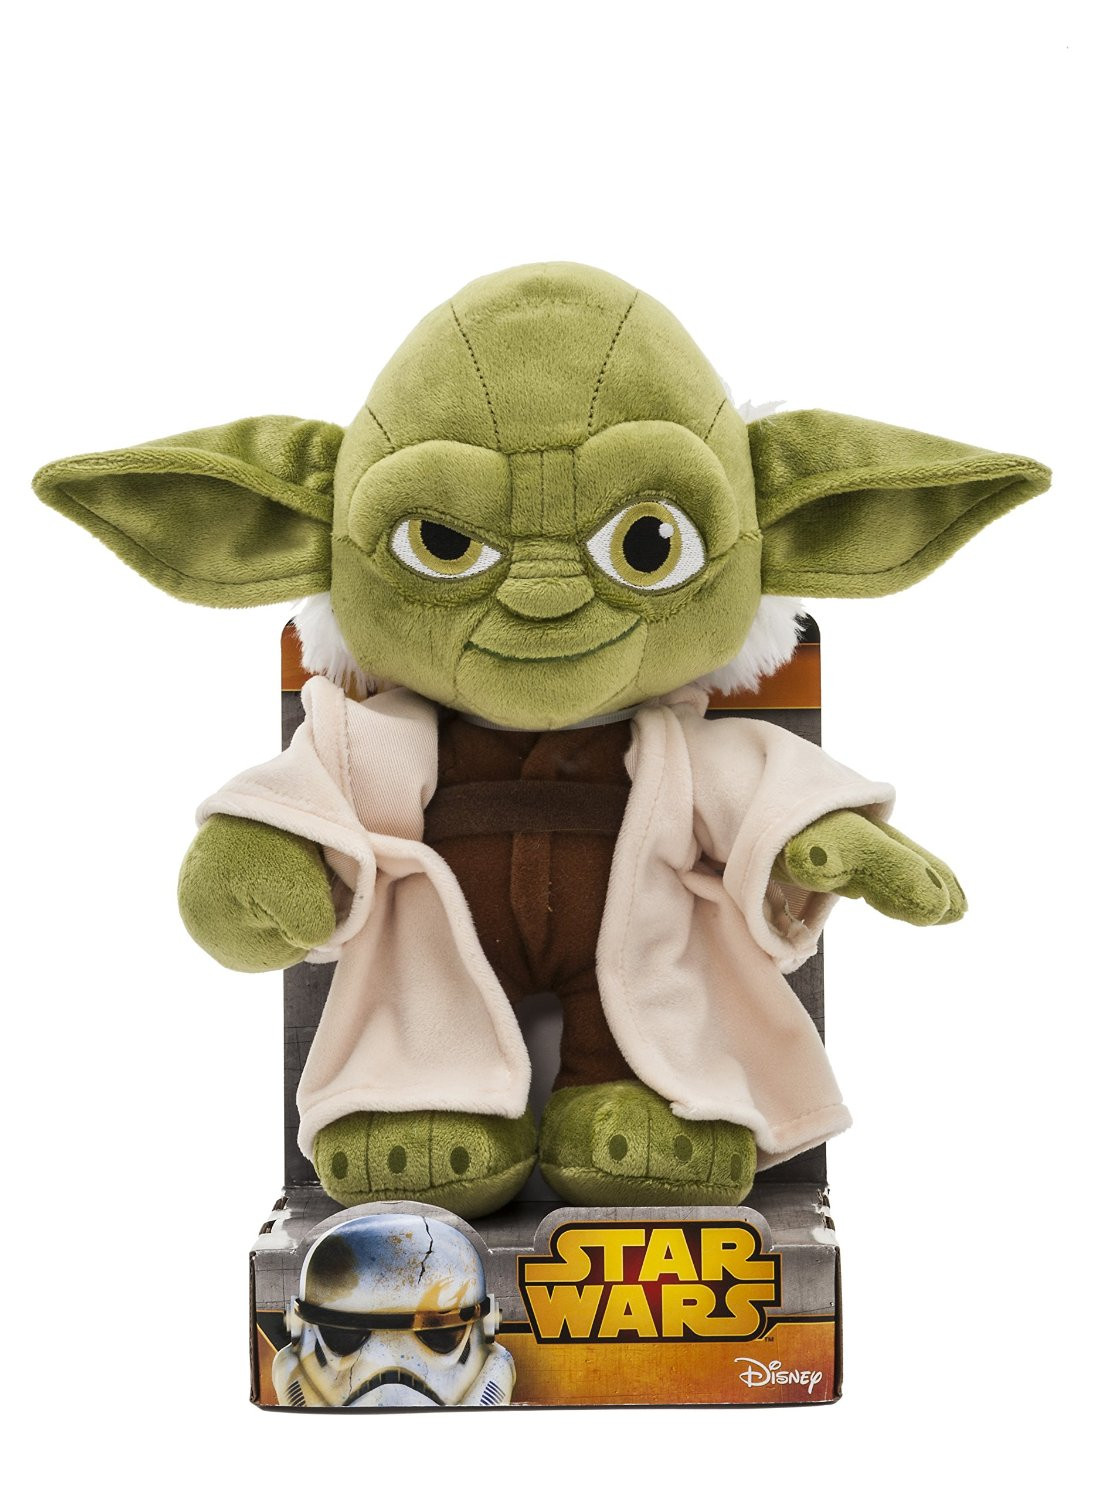 Peluche Star Wars Yoda 25 cm. con box peluches guerre stellari *01828